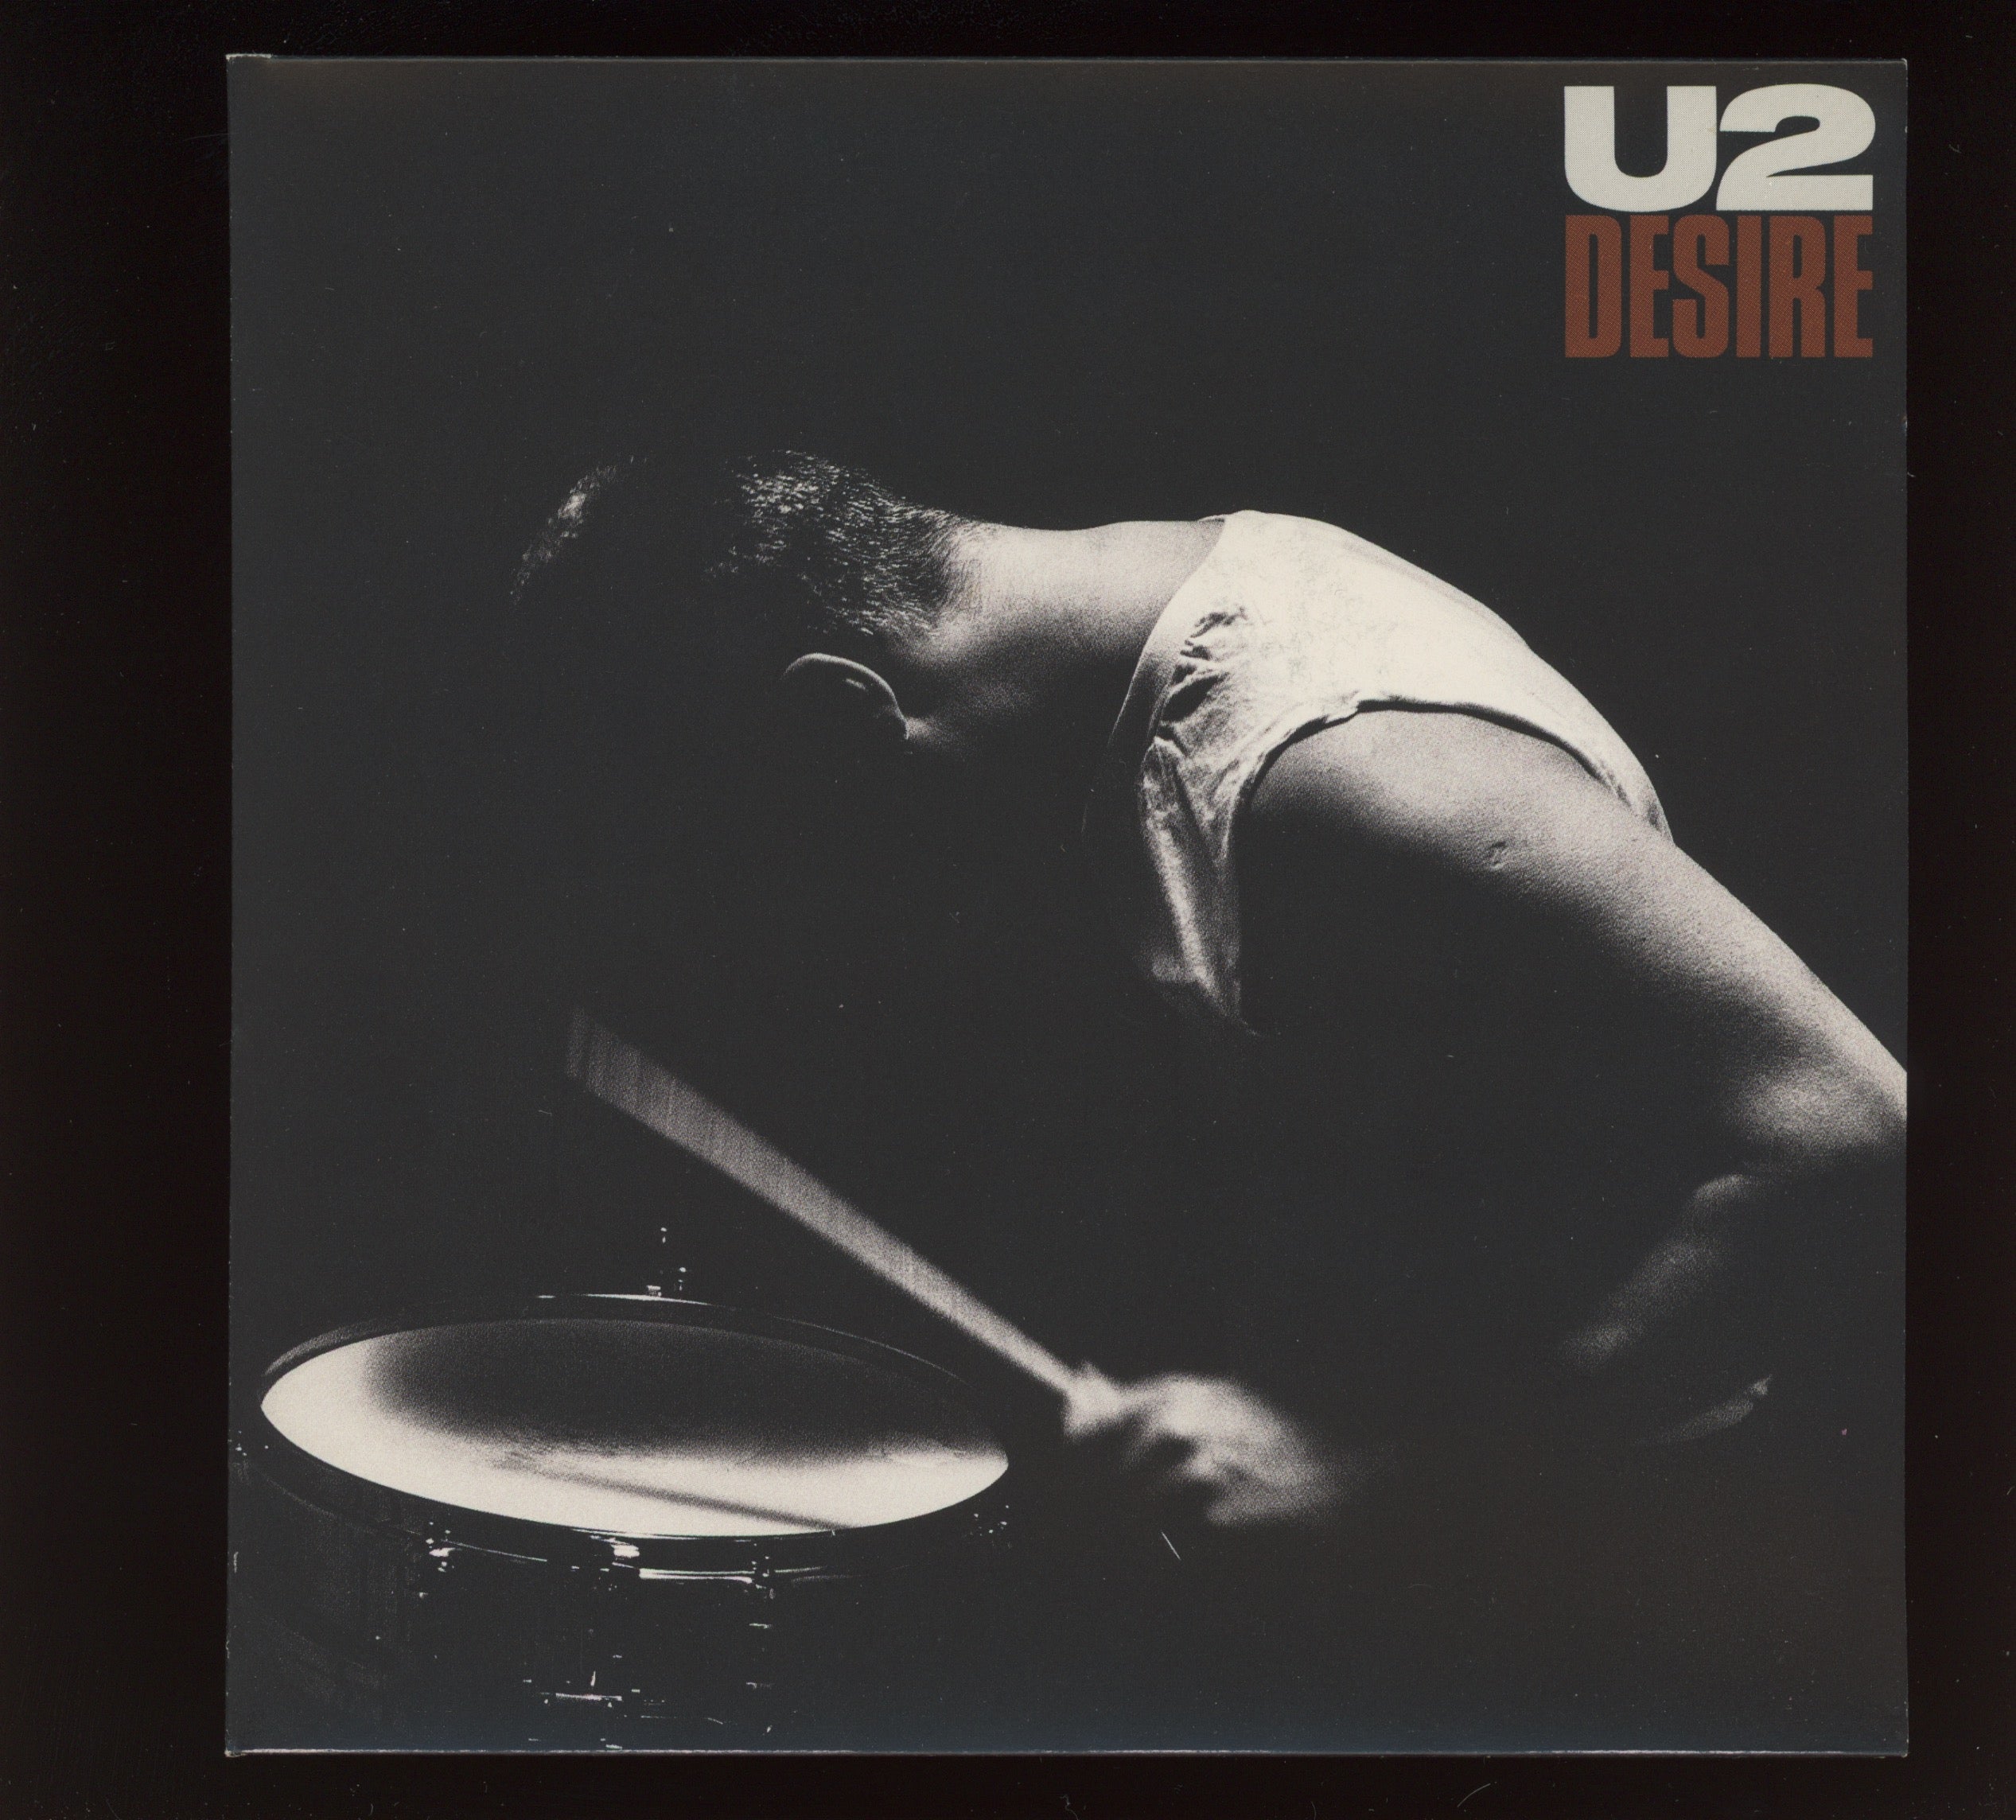 U2 - Desire on Island With Picture Sleeve Gatefold